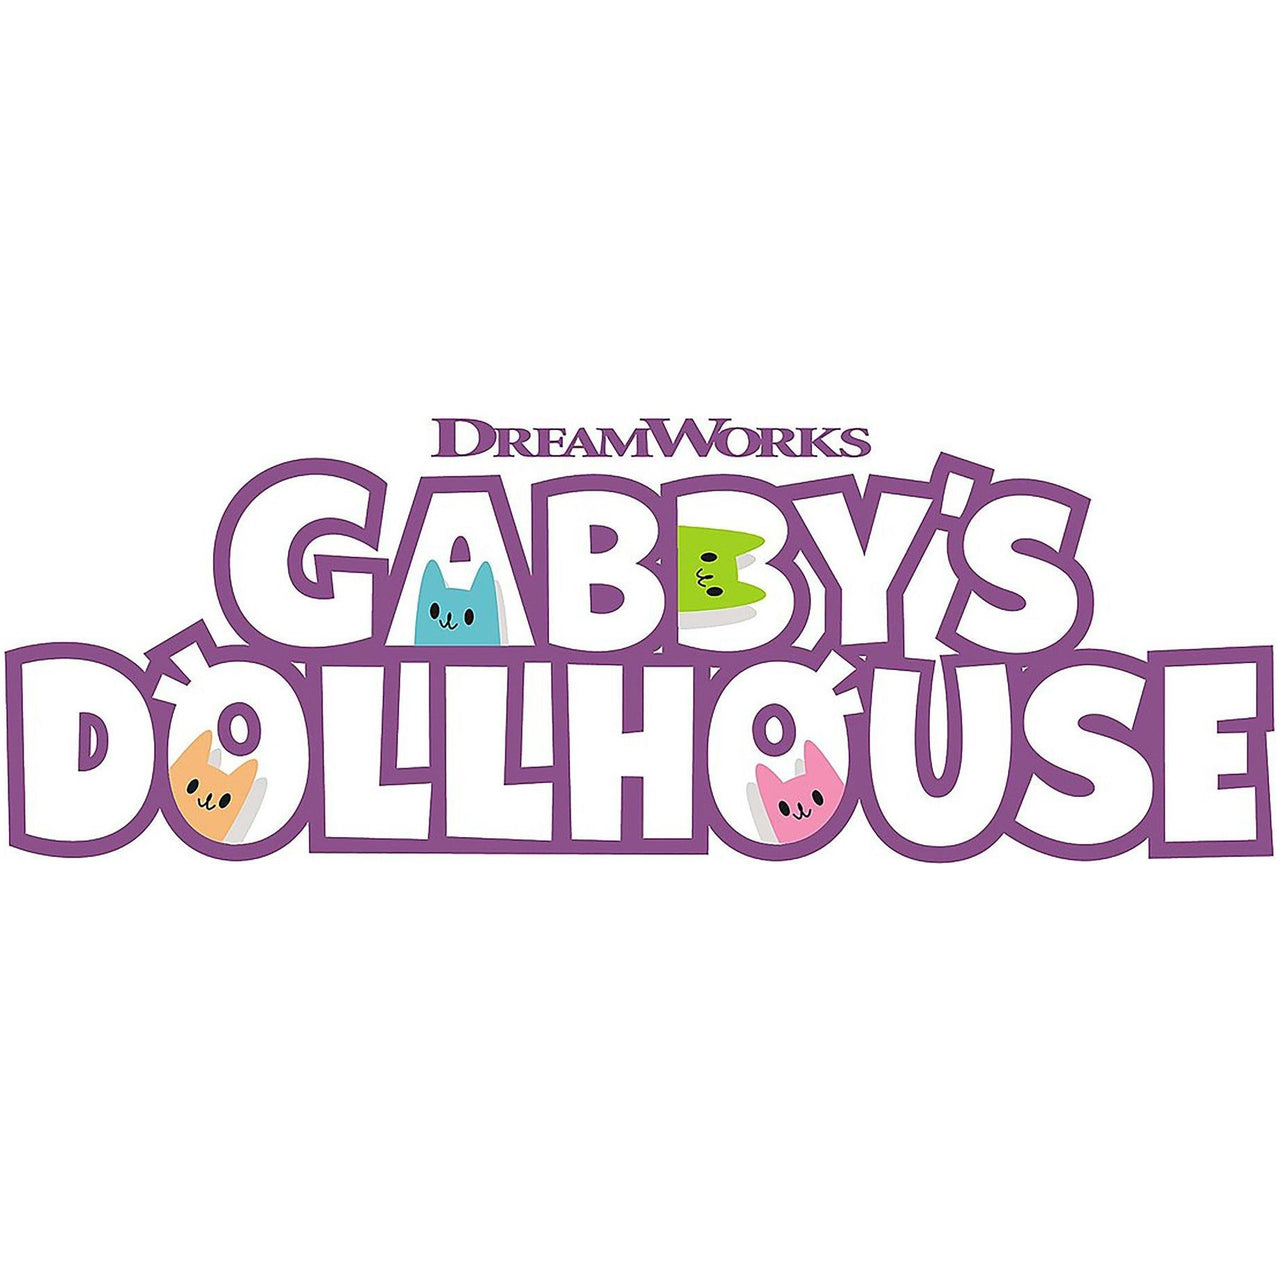 Gabby's Dollhouse 4 in a Box Jigsaw Puzzle Ravensburger